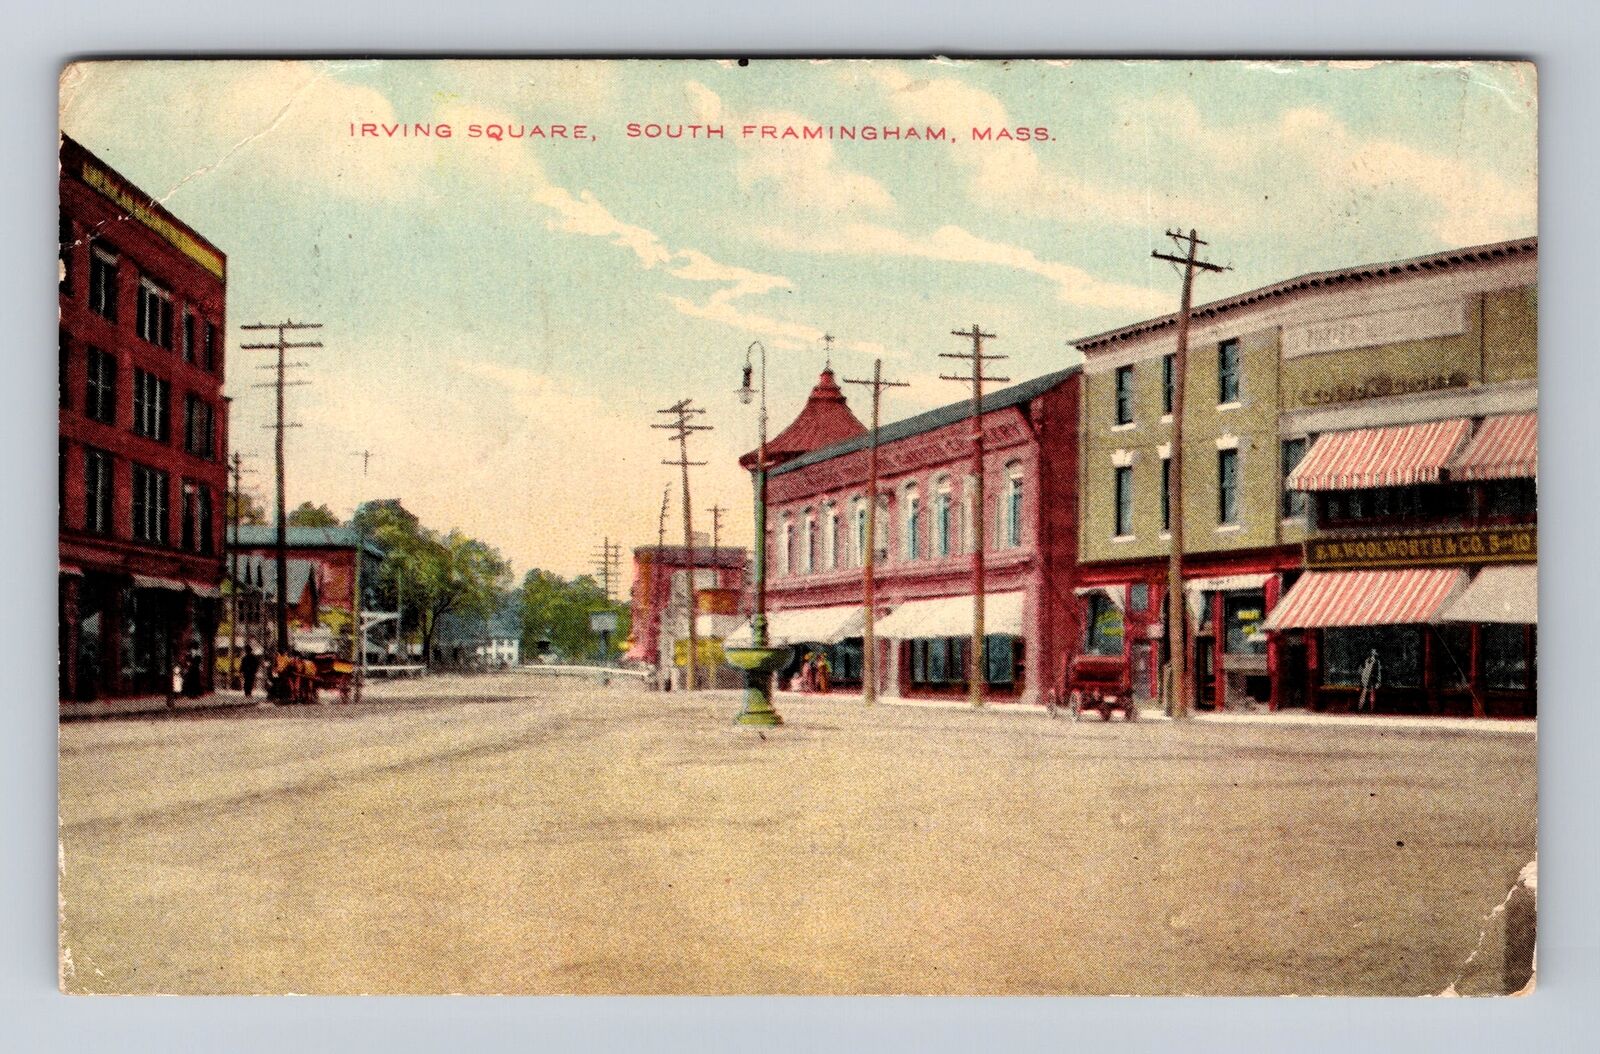 South Framingham MA-Massachusetts, Irving Square, Business Area Vintage Postcard